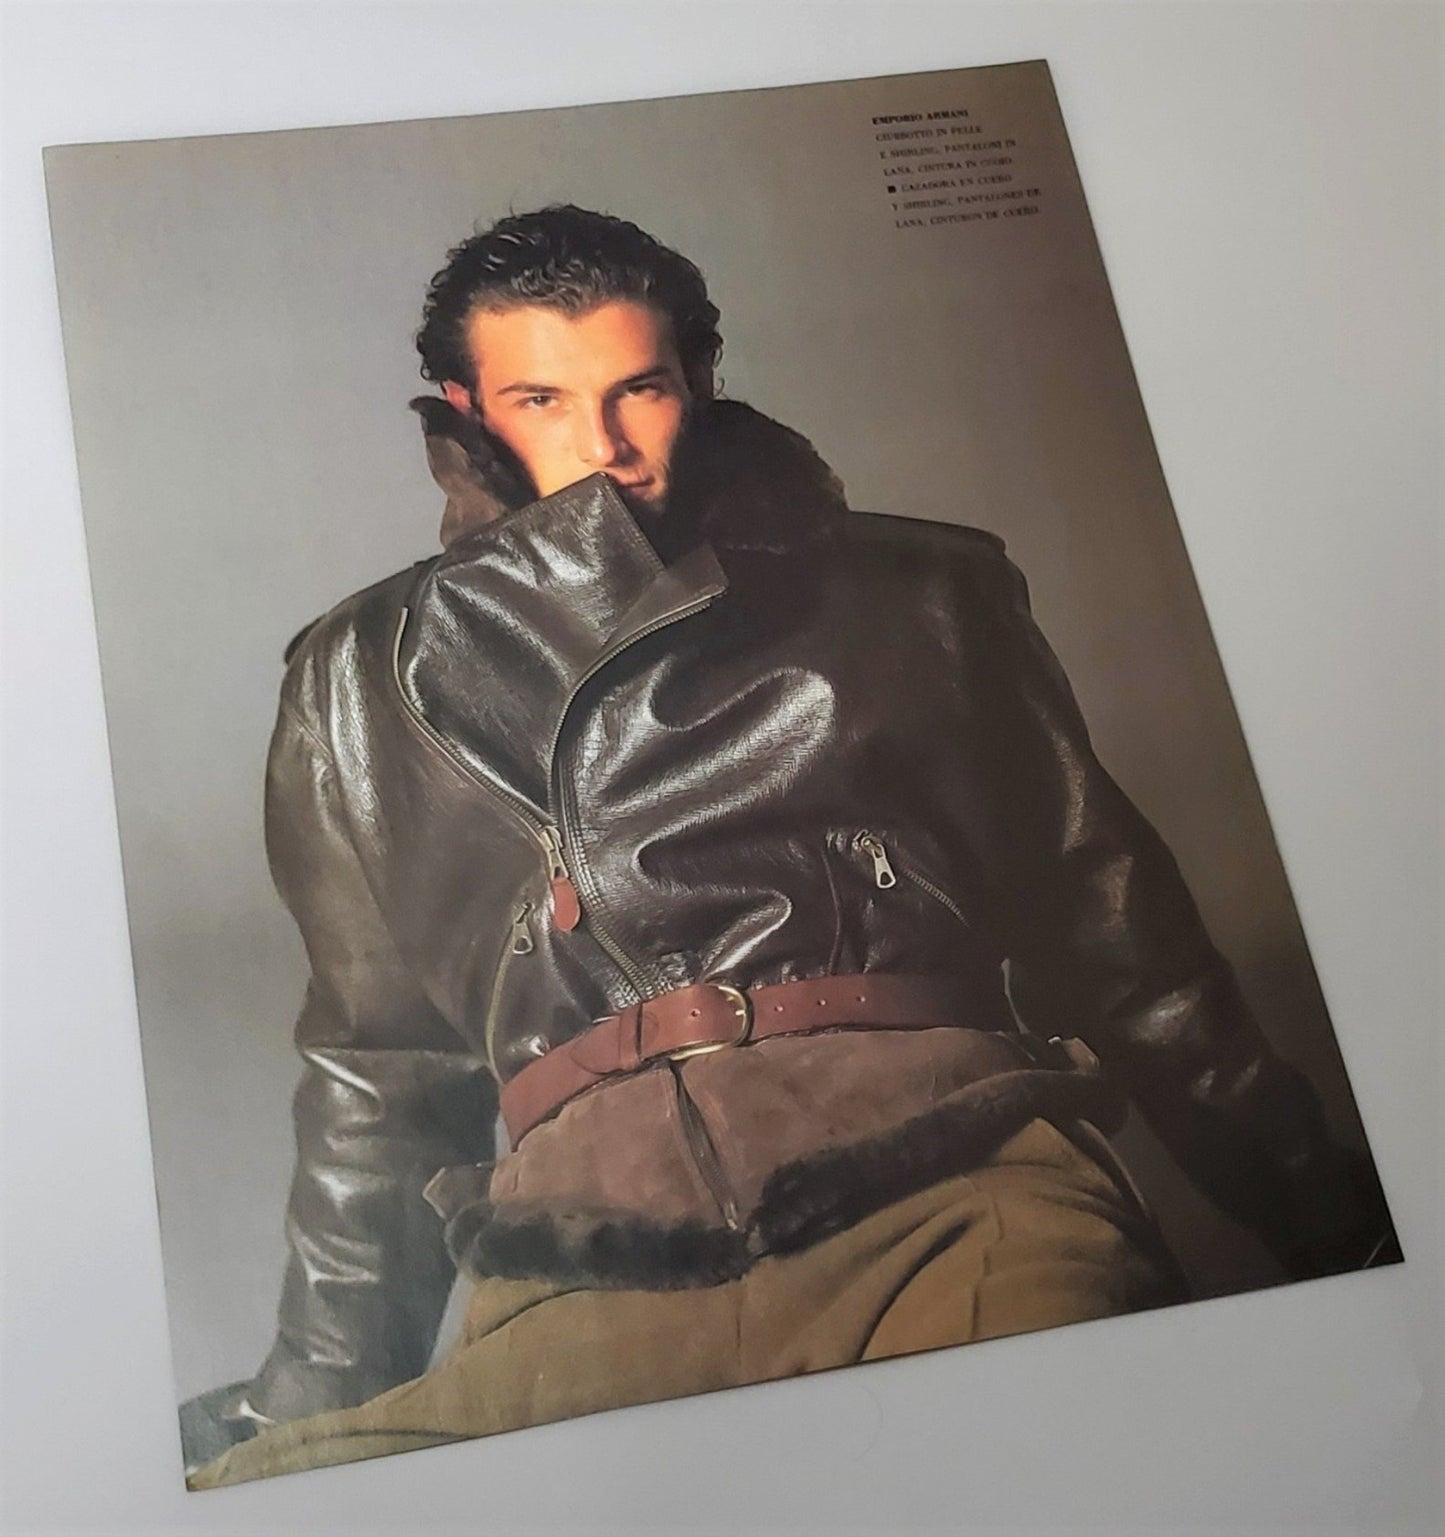 Original vintage 1989 Emporio Armani ad featured in L'UOMO magazine